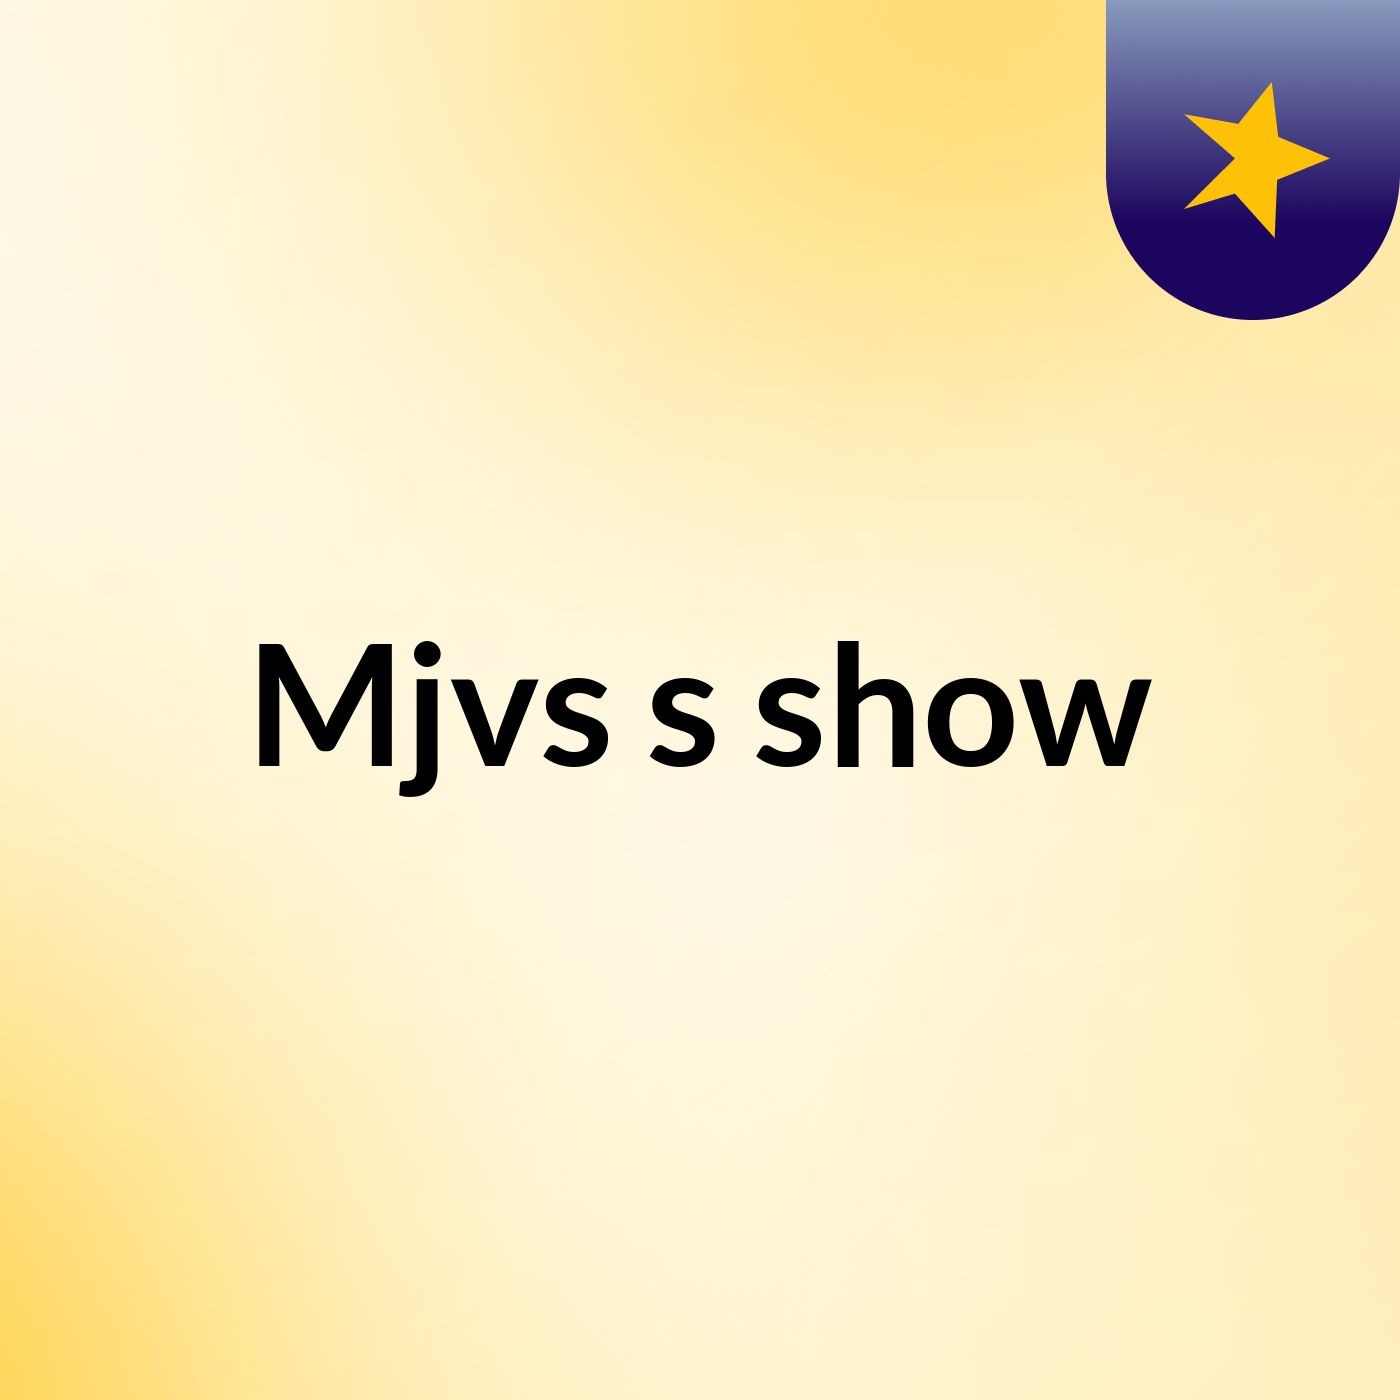 Mjvs's show